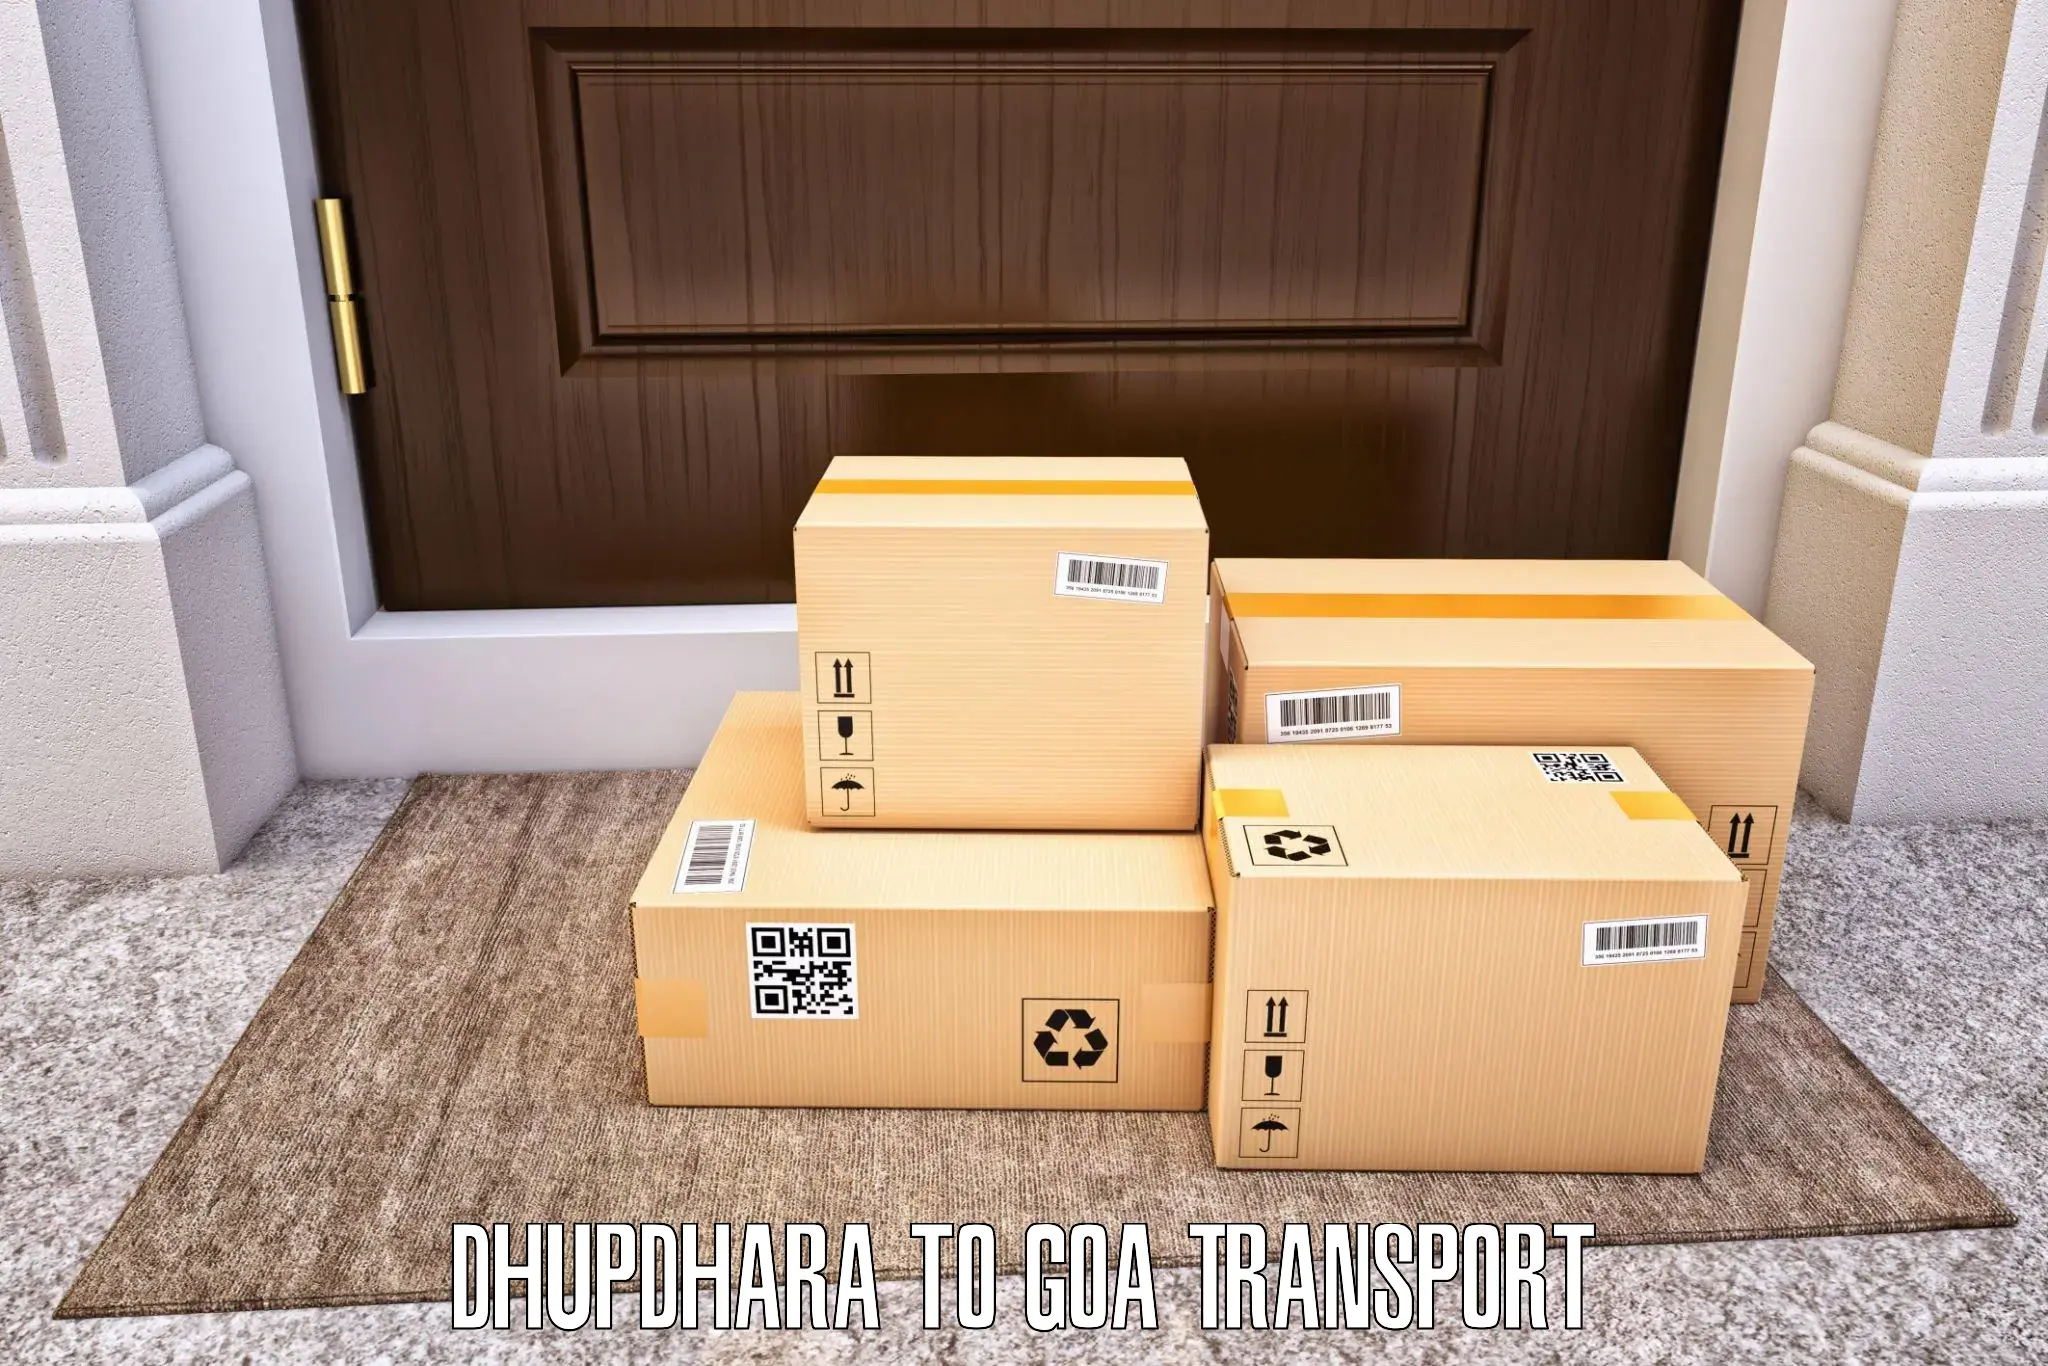 India truck logistics services Dhupdhara to Goa